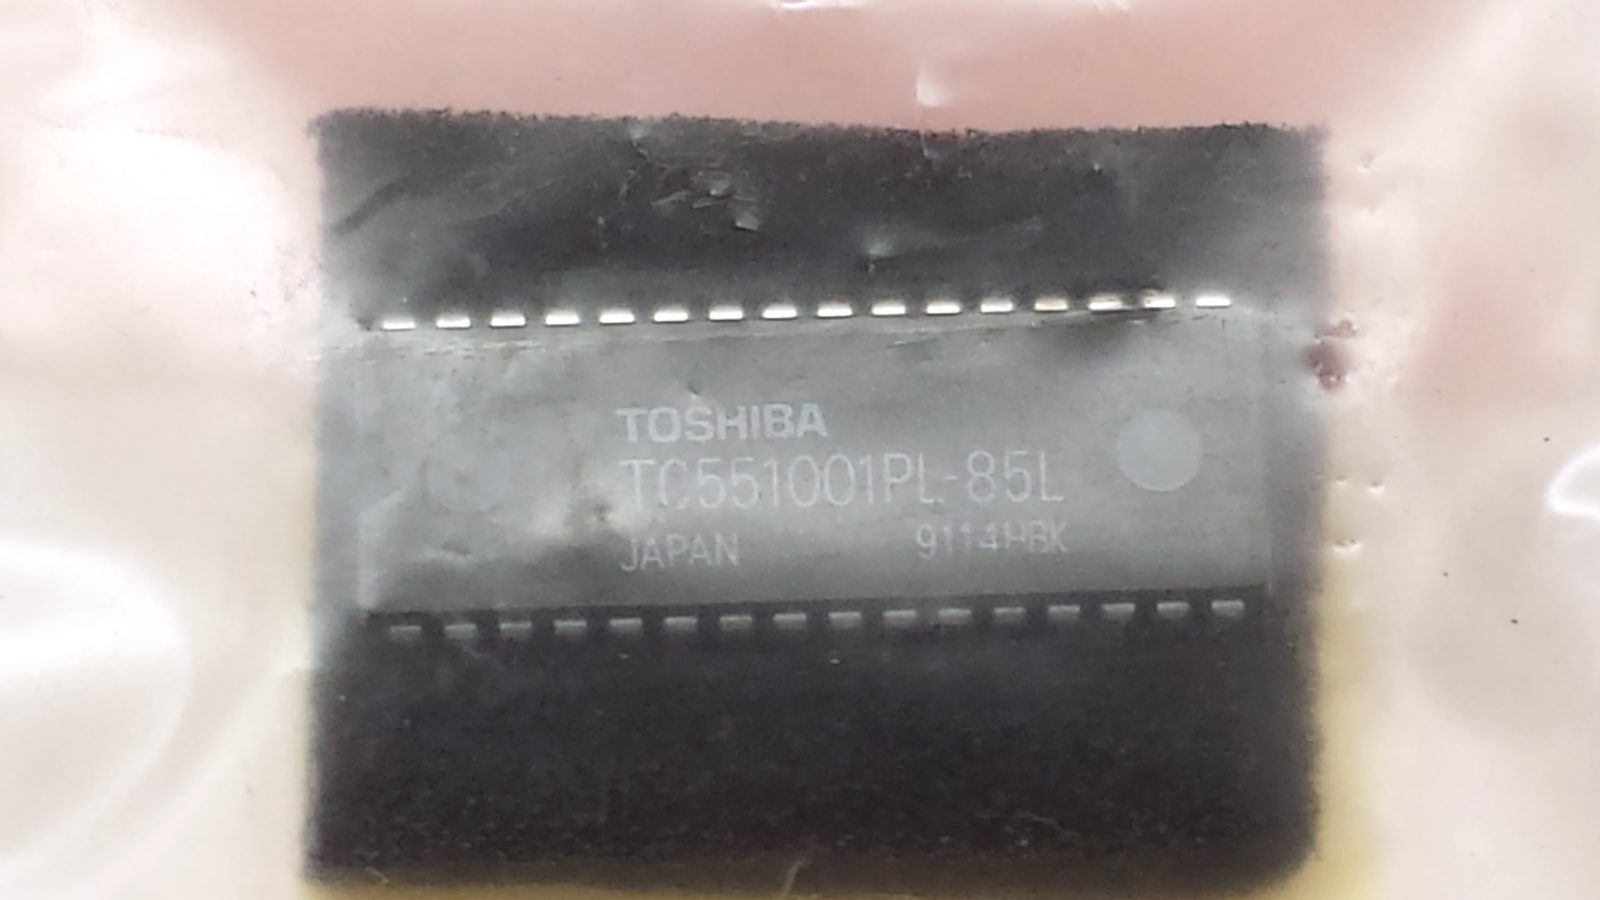 Toshiba TC551001PL-85L Integrated Circuit